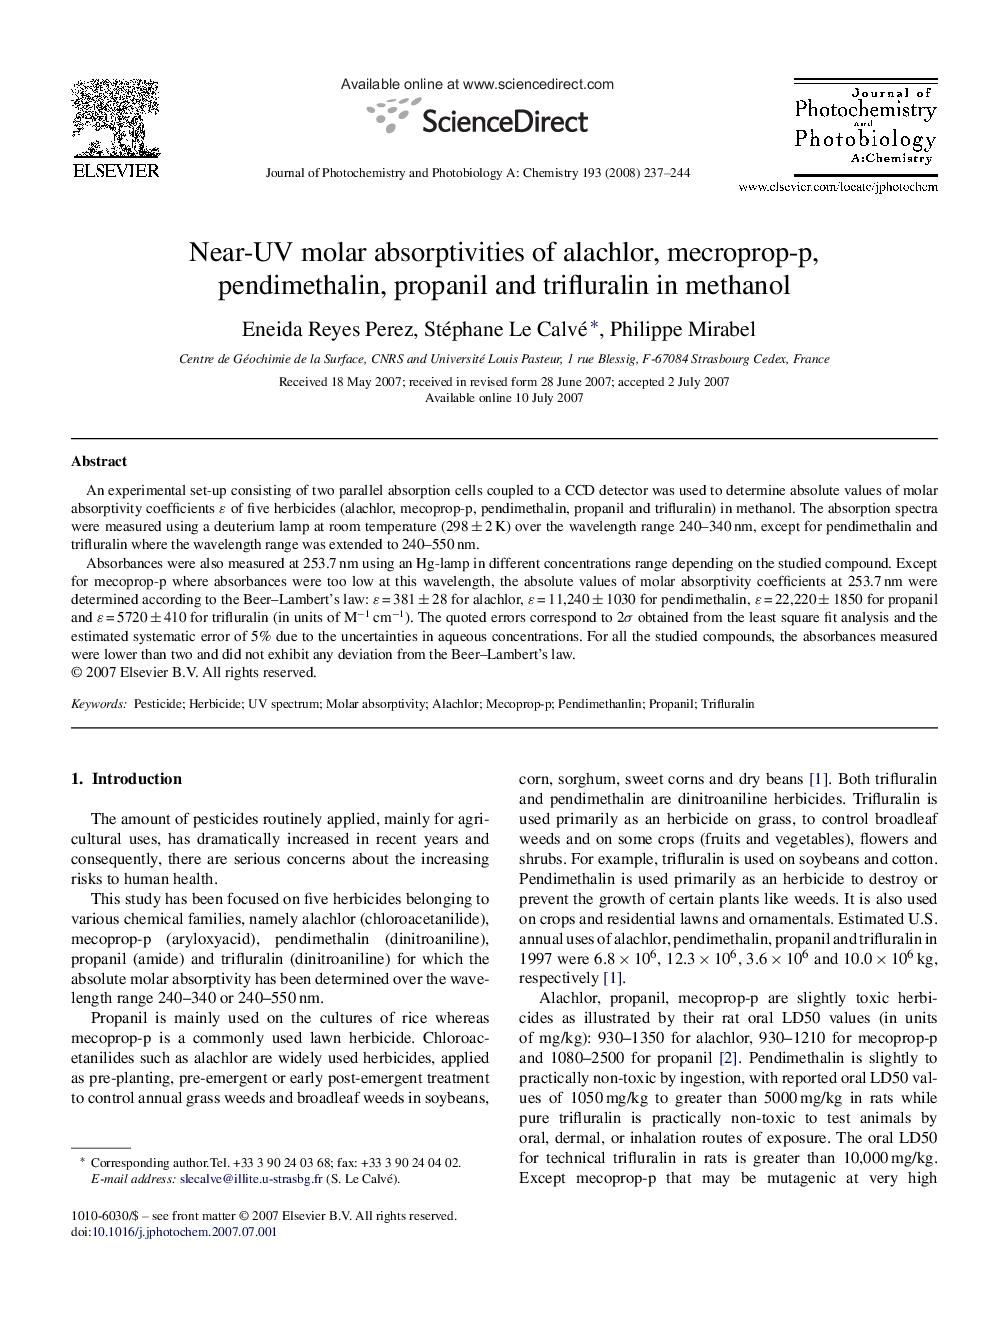 Near-UV molar absorptivities of alachlor, mecroprop-p, pendimethalin, propanil and trifluralin in methanol